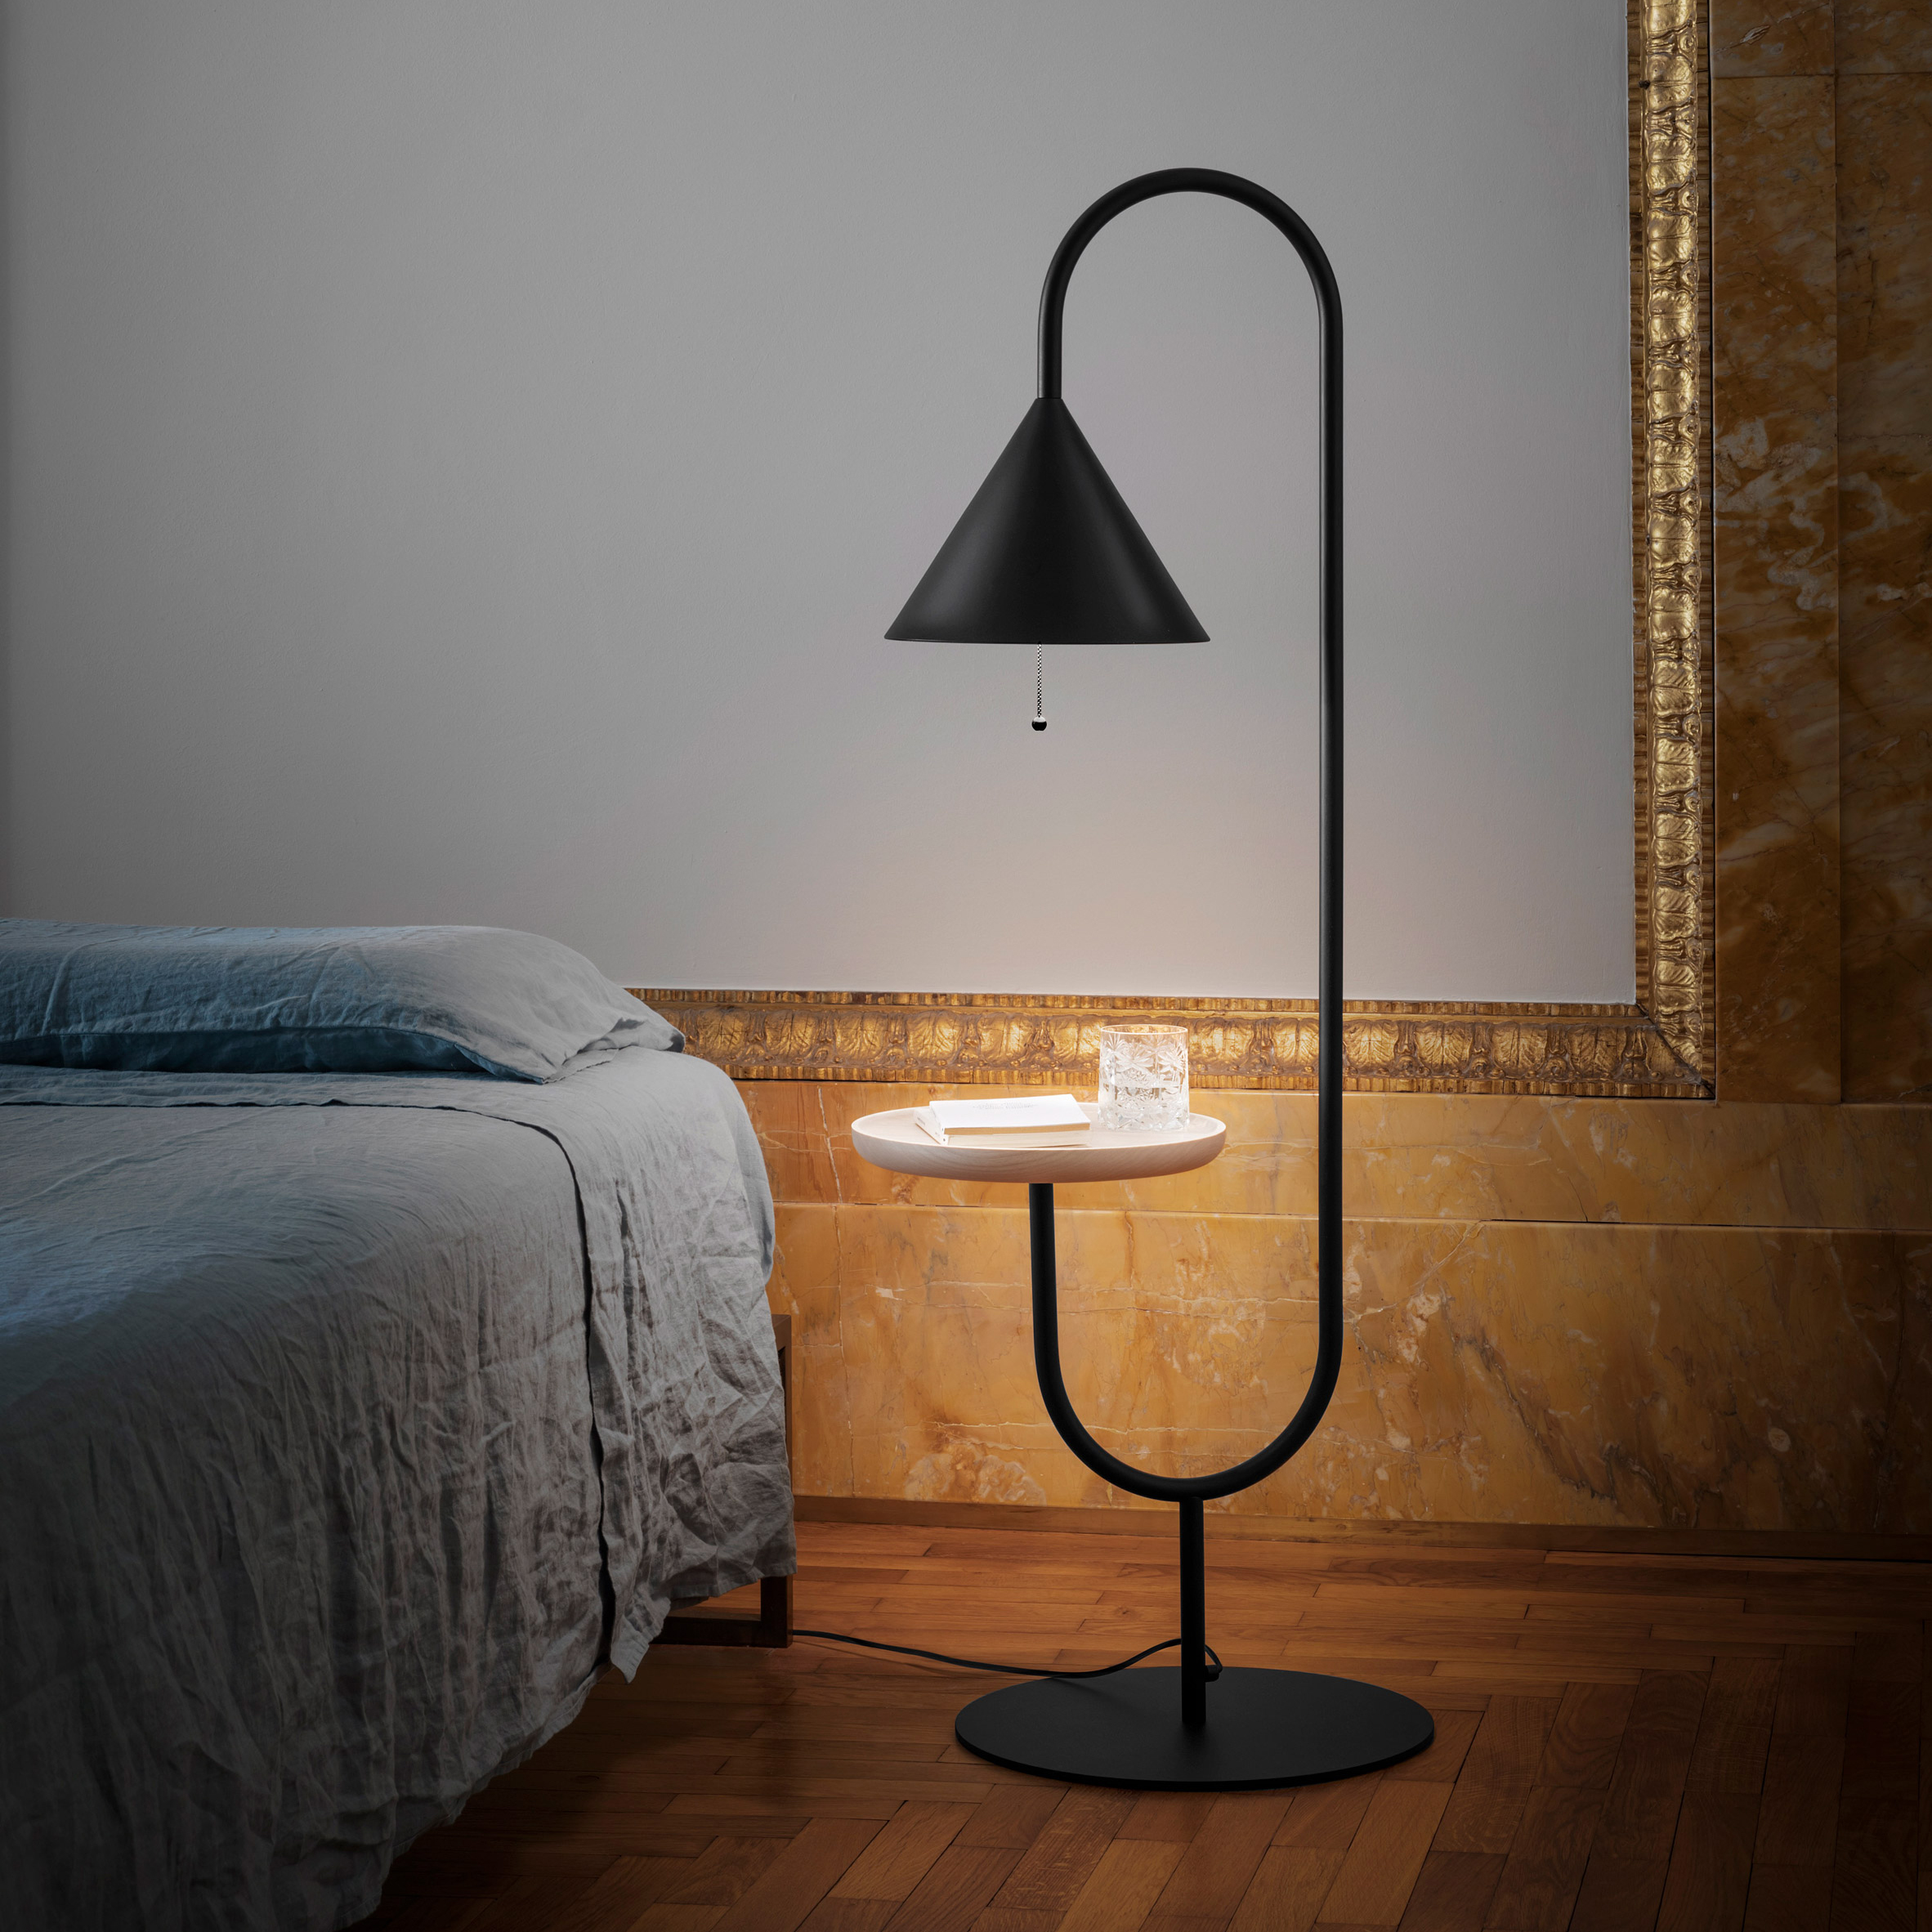 Ozz lamp by Miniforms